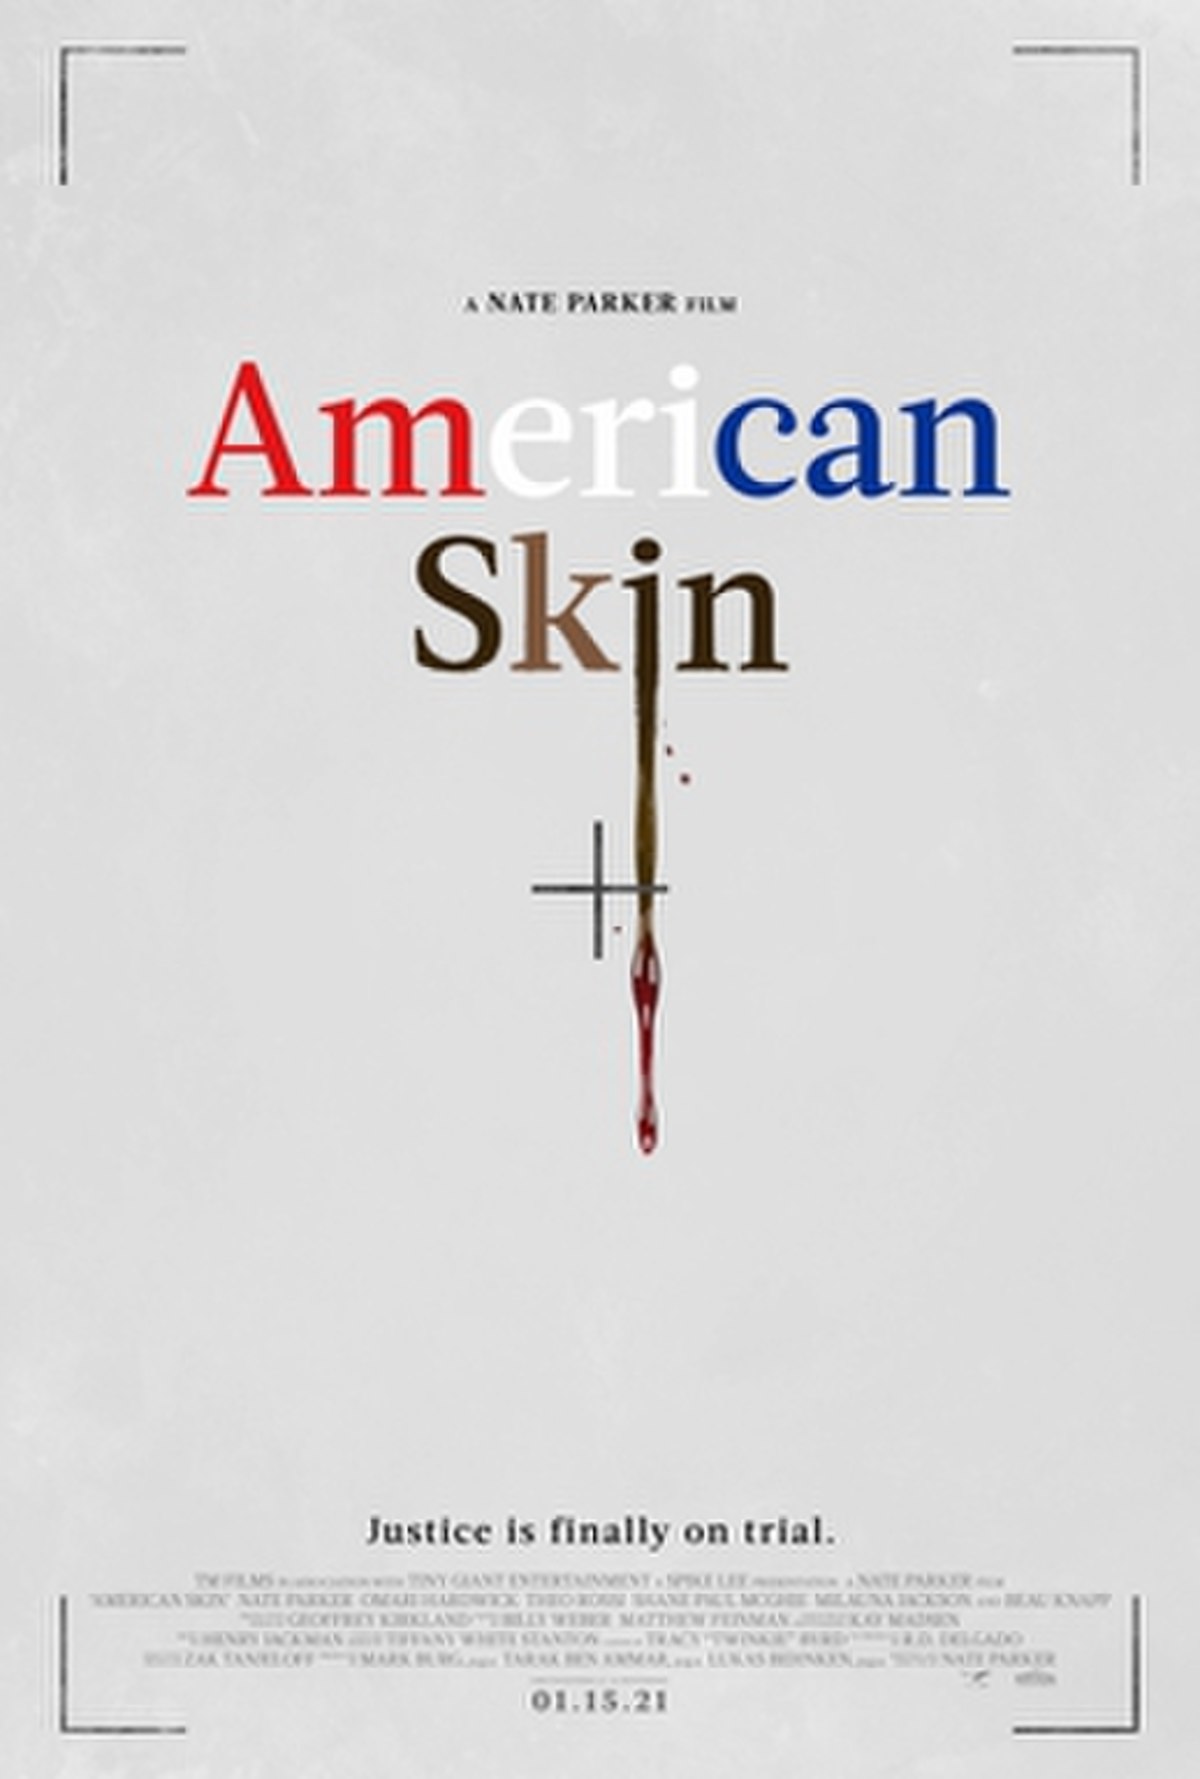 American Skin (film) - Wikipedia